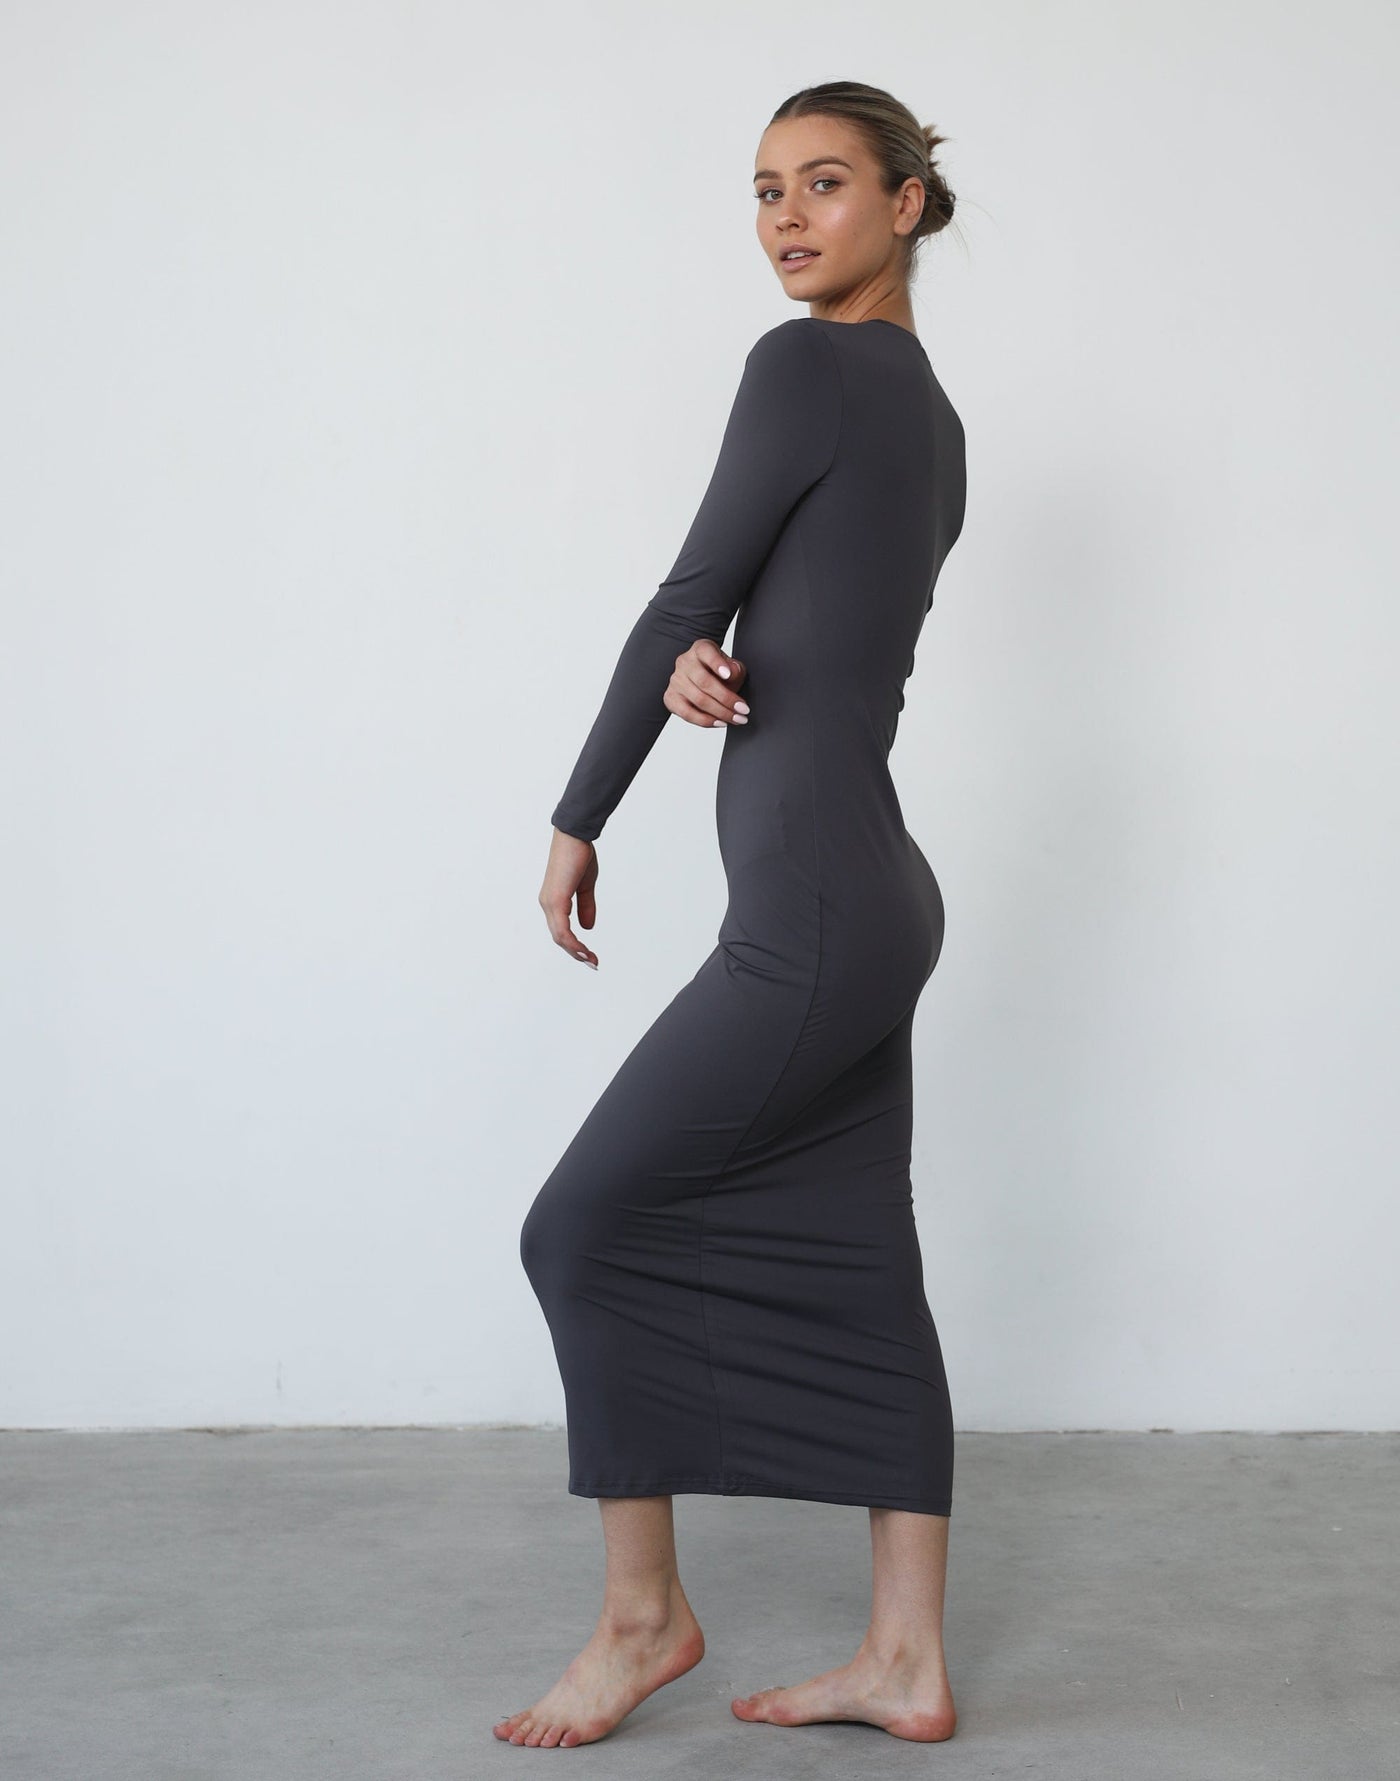 Shontae Long Sleeve Maxi Dress (Slate) - Bodycon Maxi Dress - Women's Dress - Charcoal Clothing